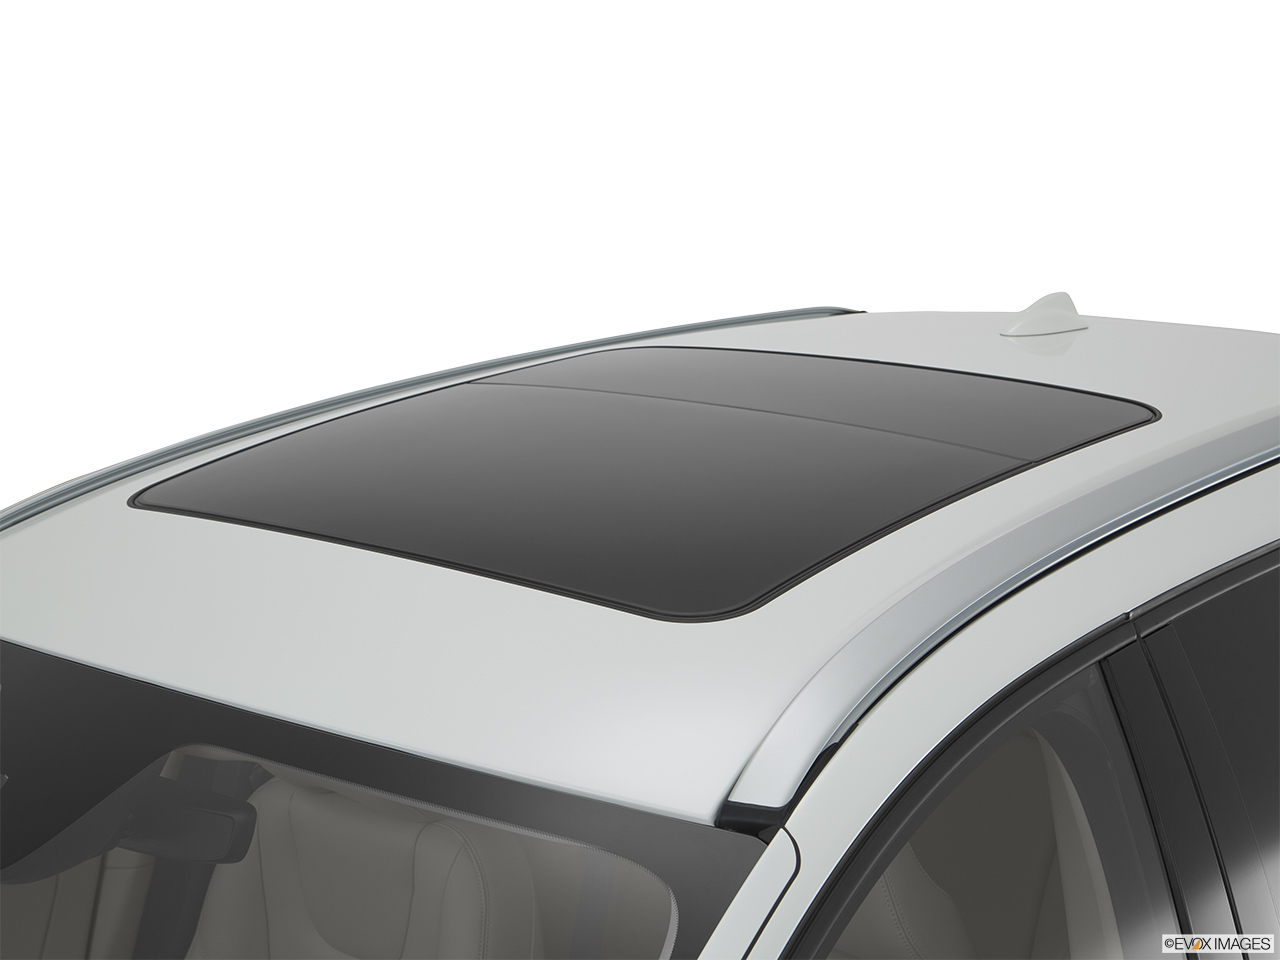 2016 Volvo XC60 T5 Drive-E FWD Premier Sunroof/moonroof. 